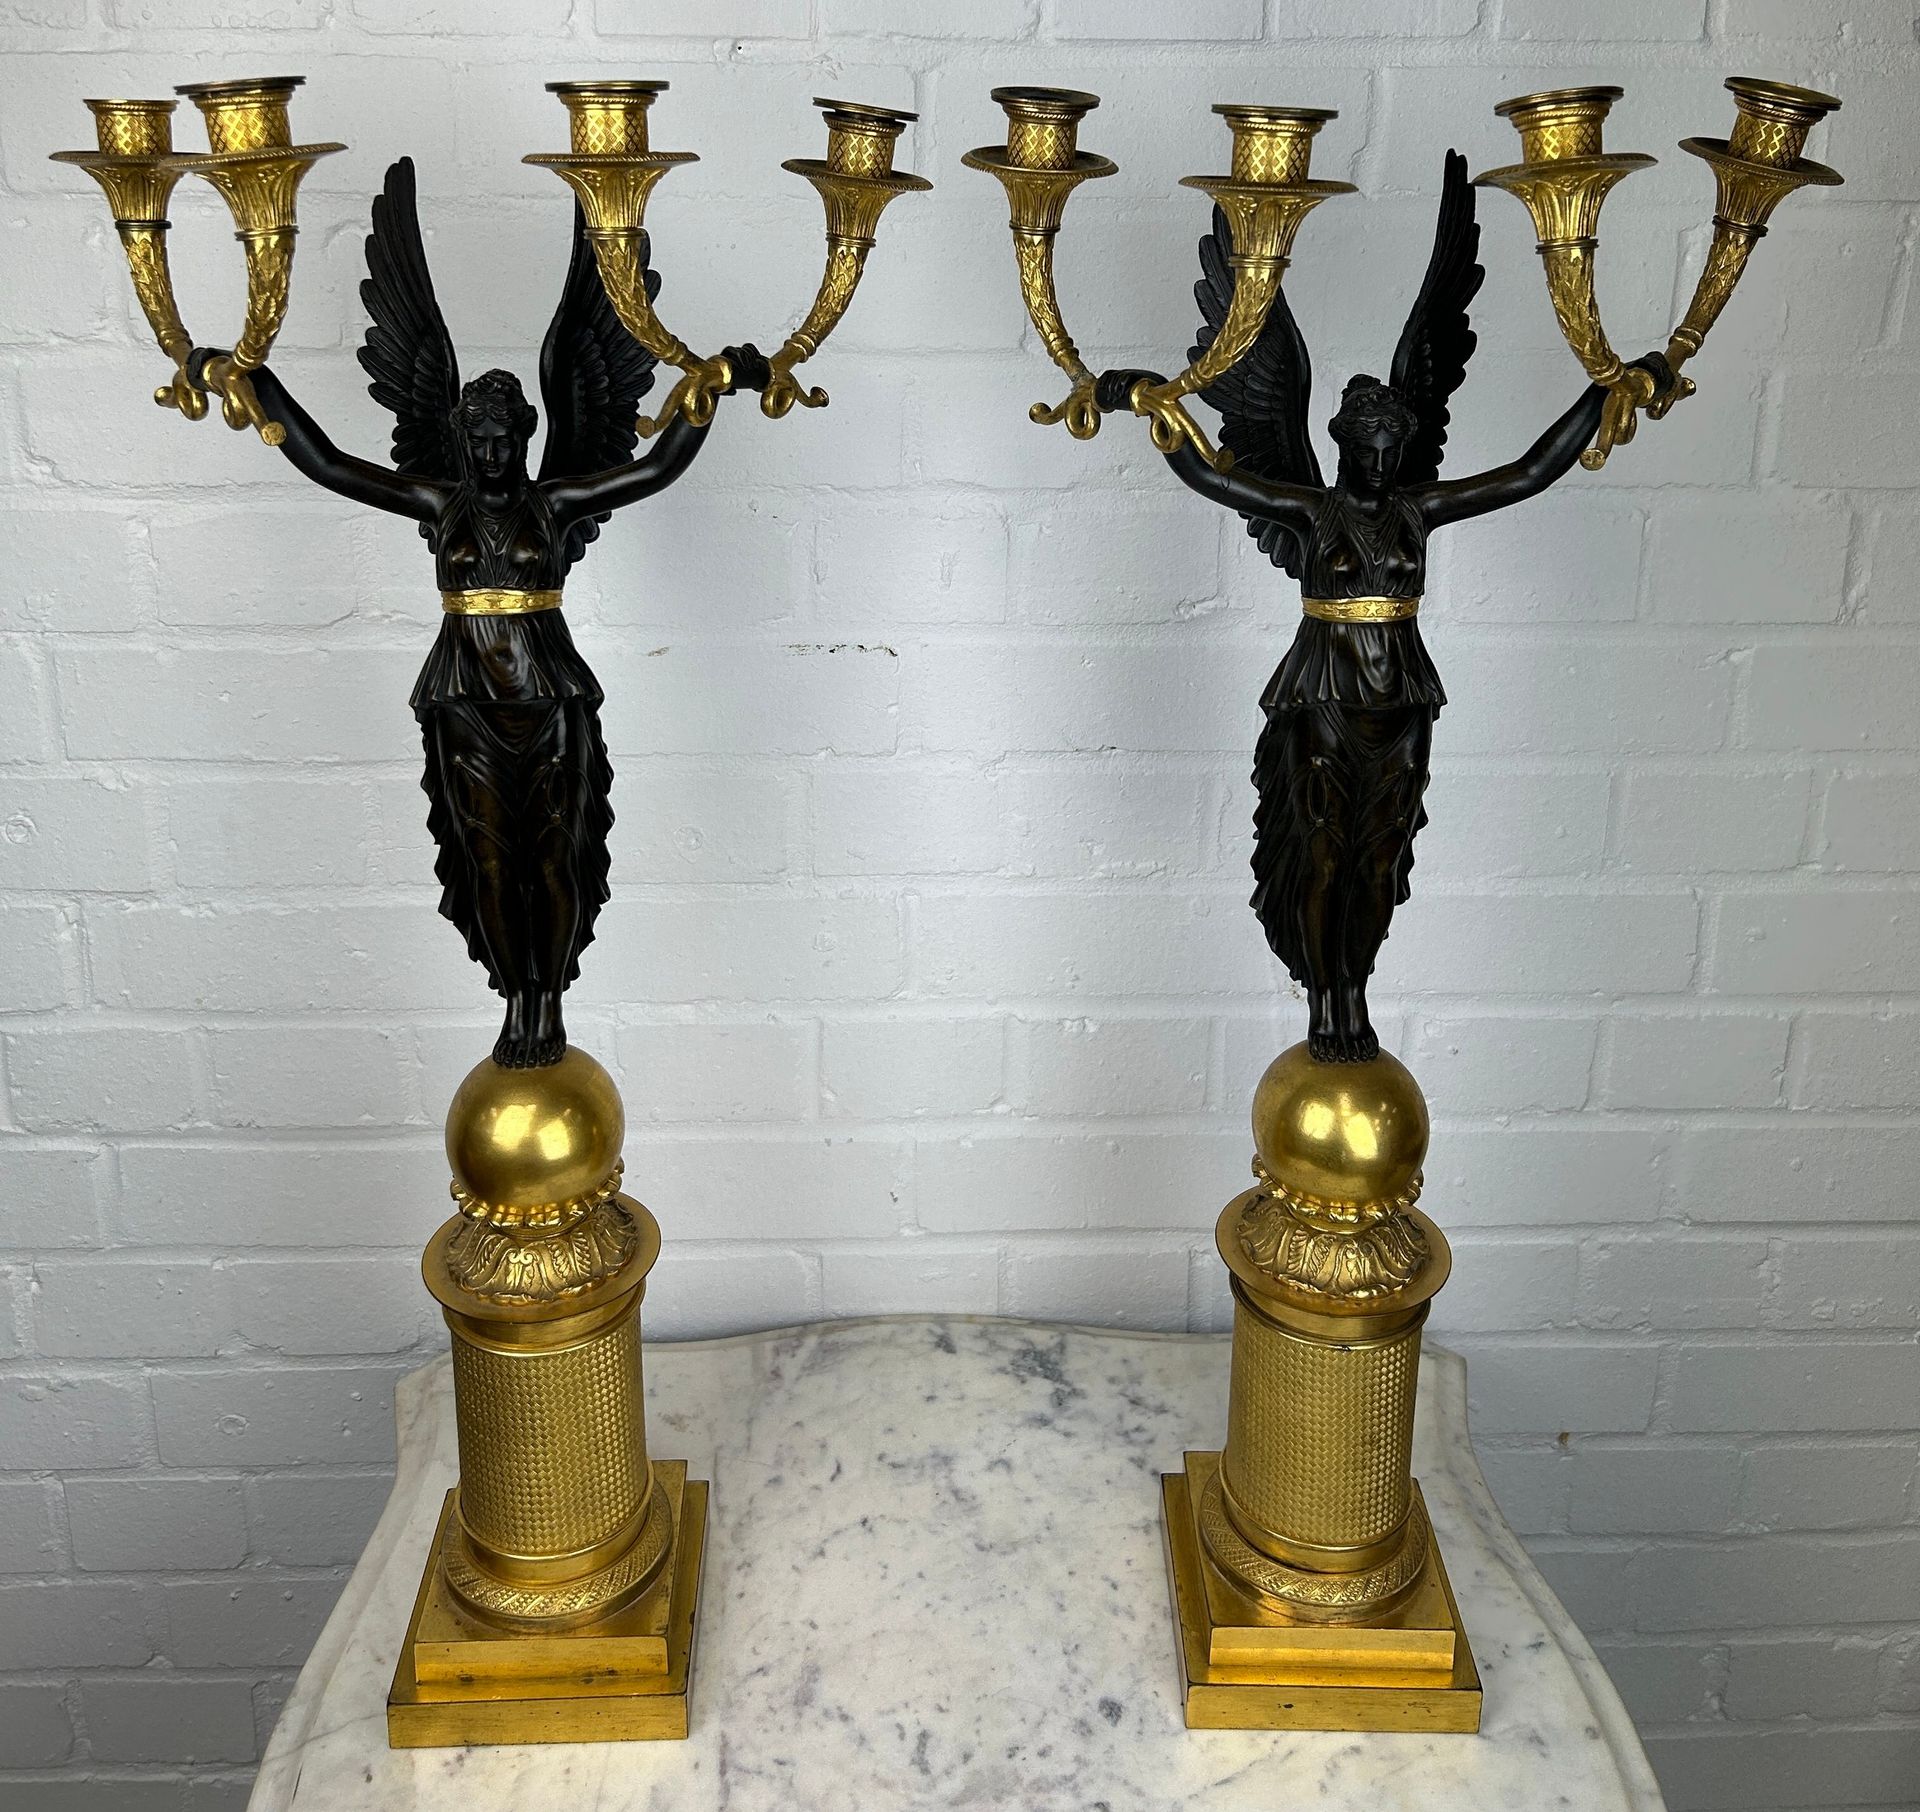 Null 一对 20 世纪早期法国帝国设计风格的镀金青铜四灯烛台，采用皮埃尔-菲利普-托米尔（1751-1843 年，法国人）的设计风格

每个烛台上都有一个寓&hellip;